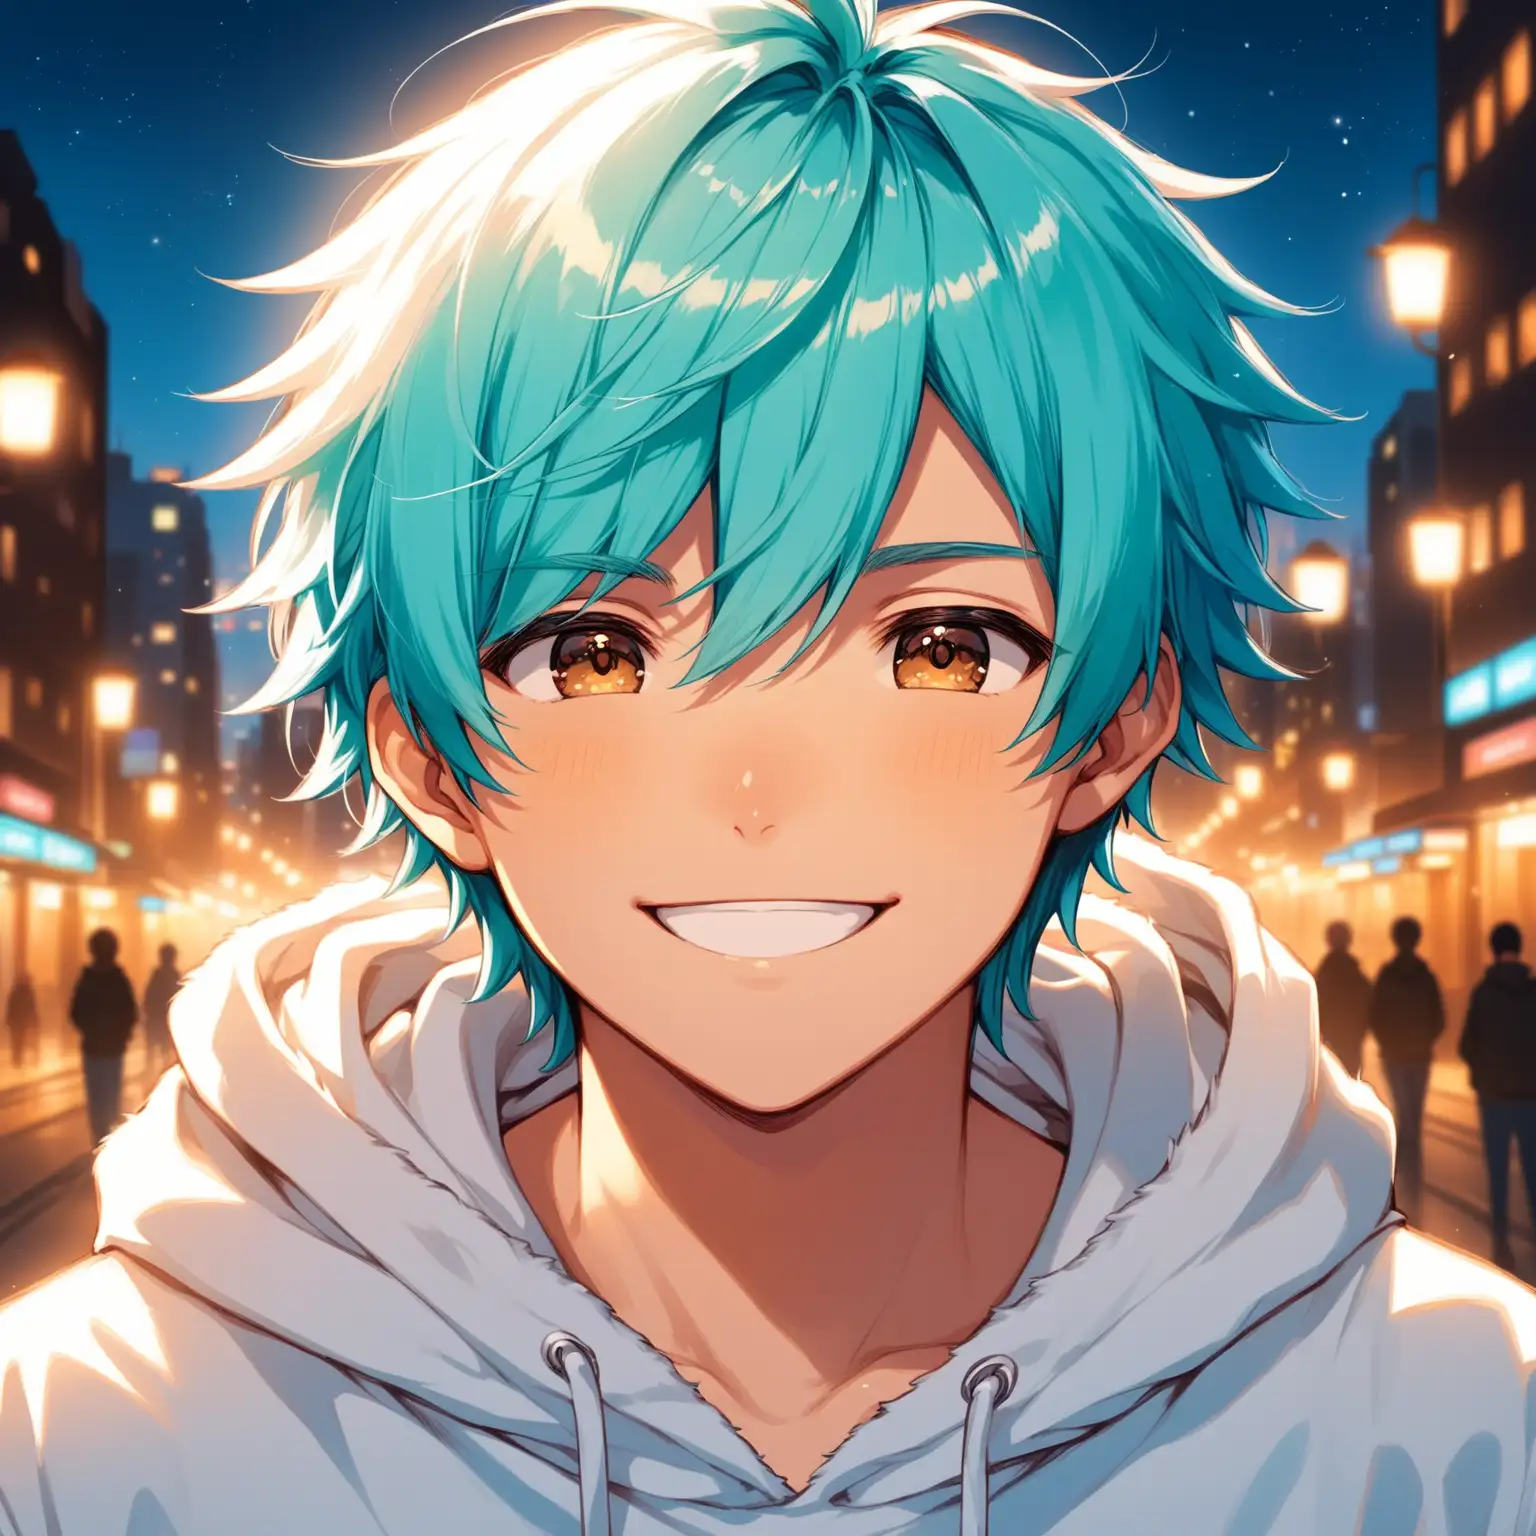 Charming Anime Boy Portrait with Aquamarine Hair in Urban Setting